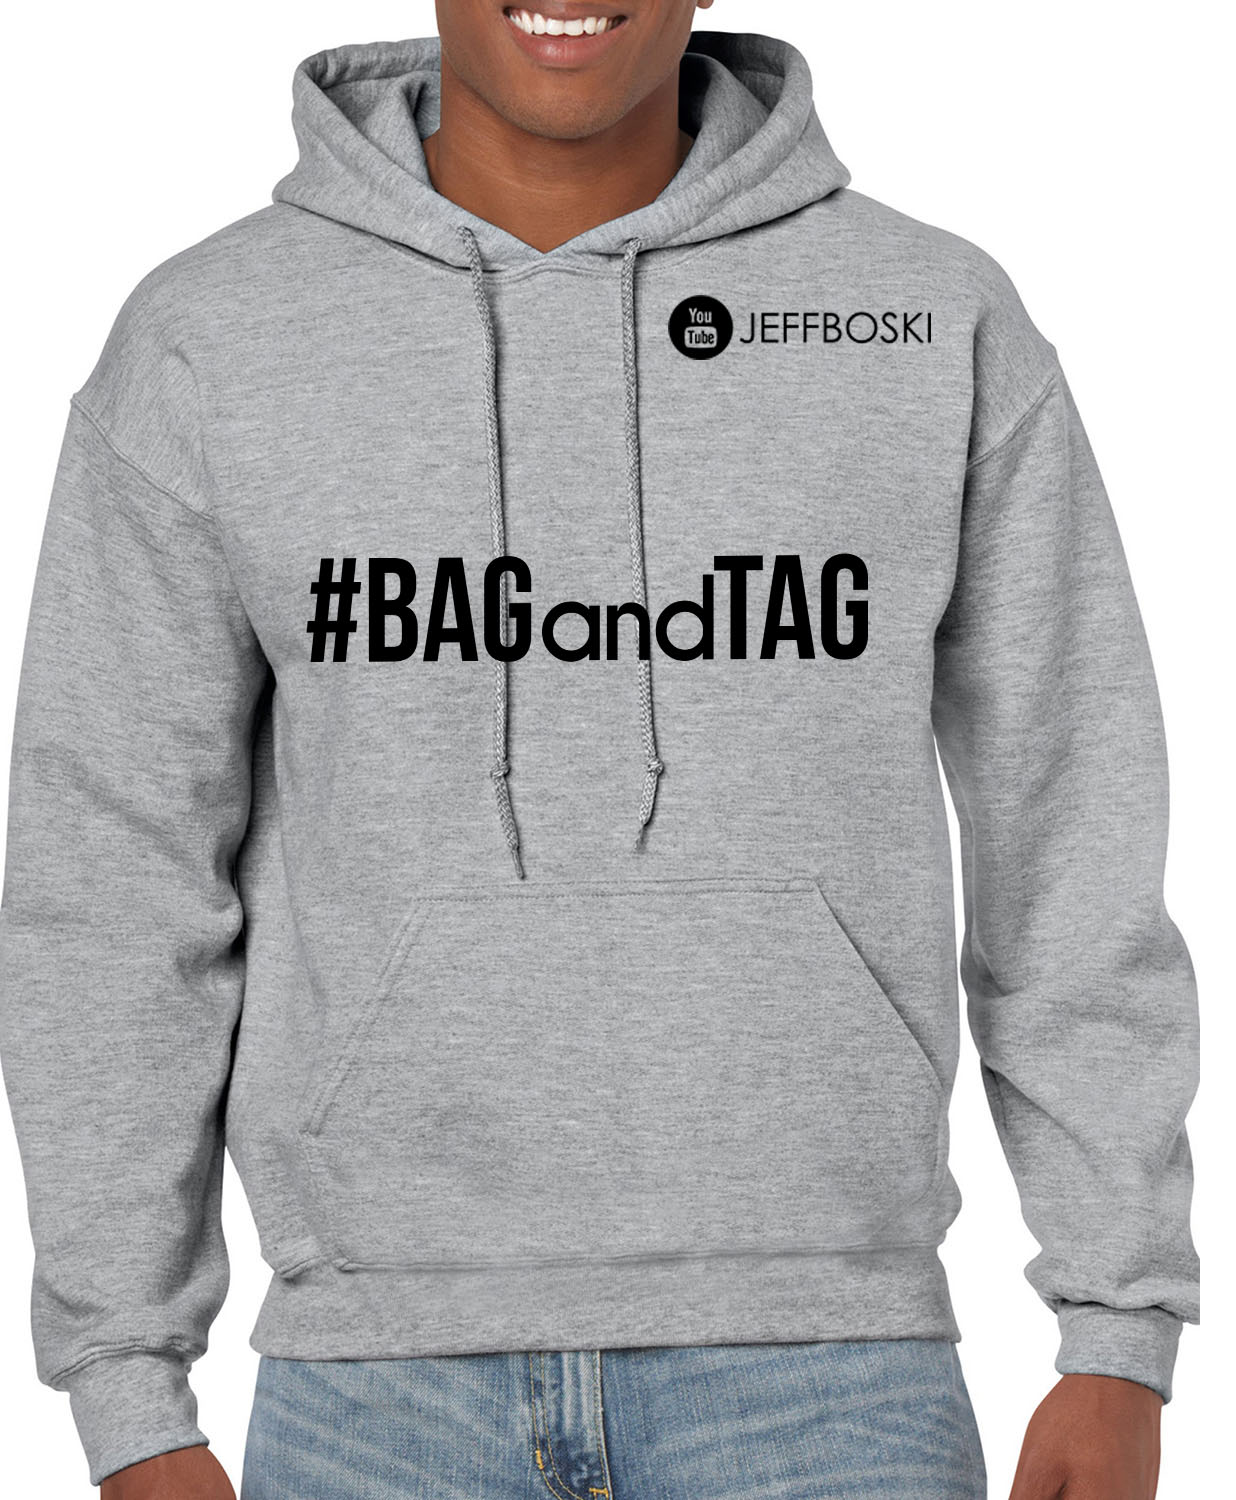 BAG and TAG Unisex hoodies